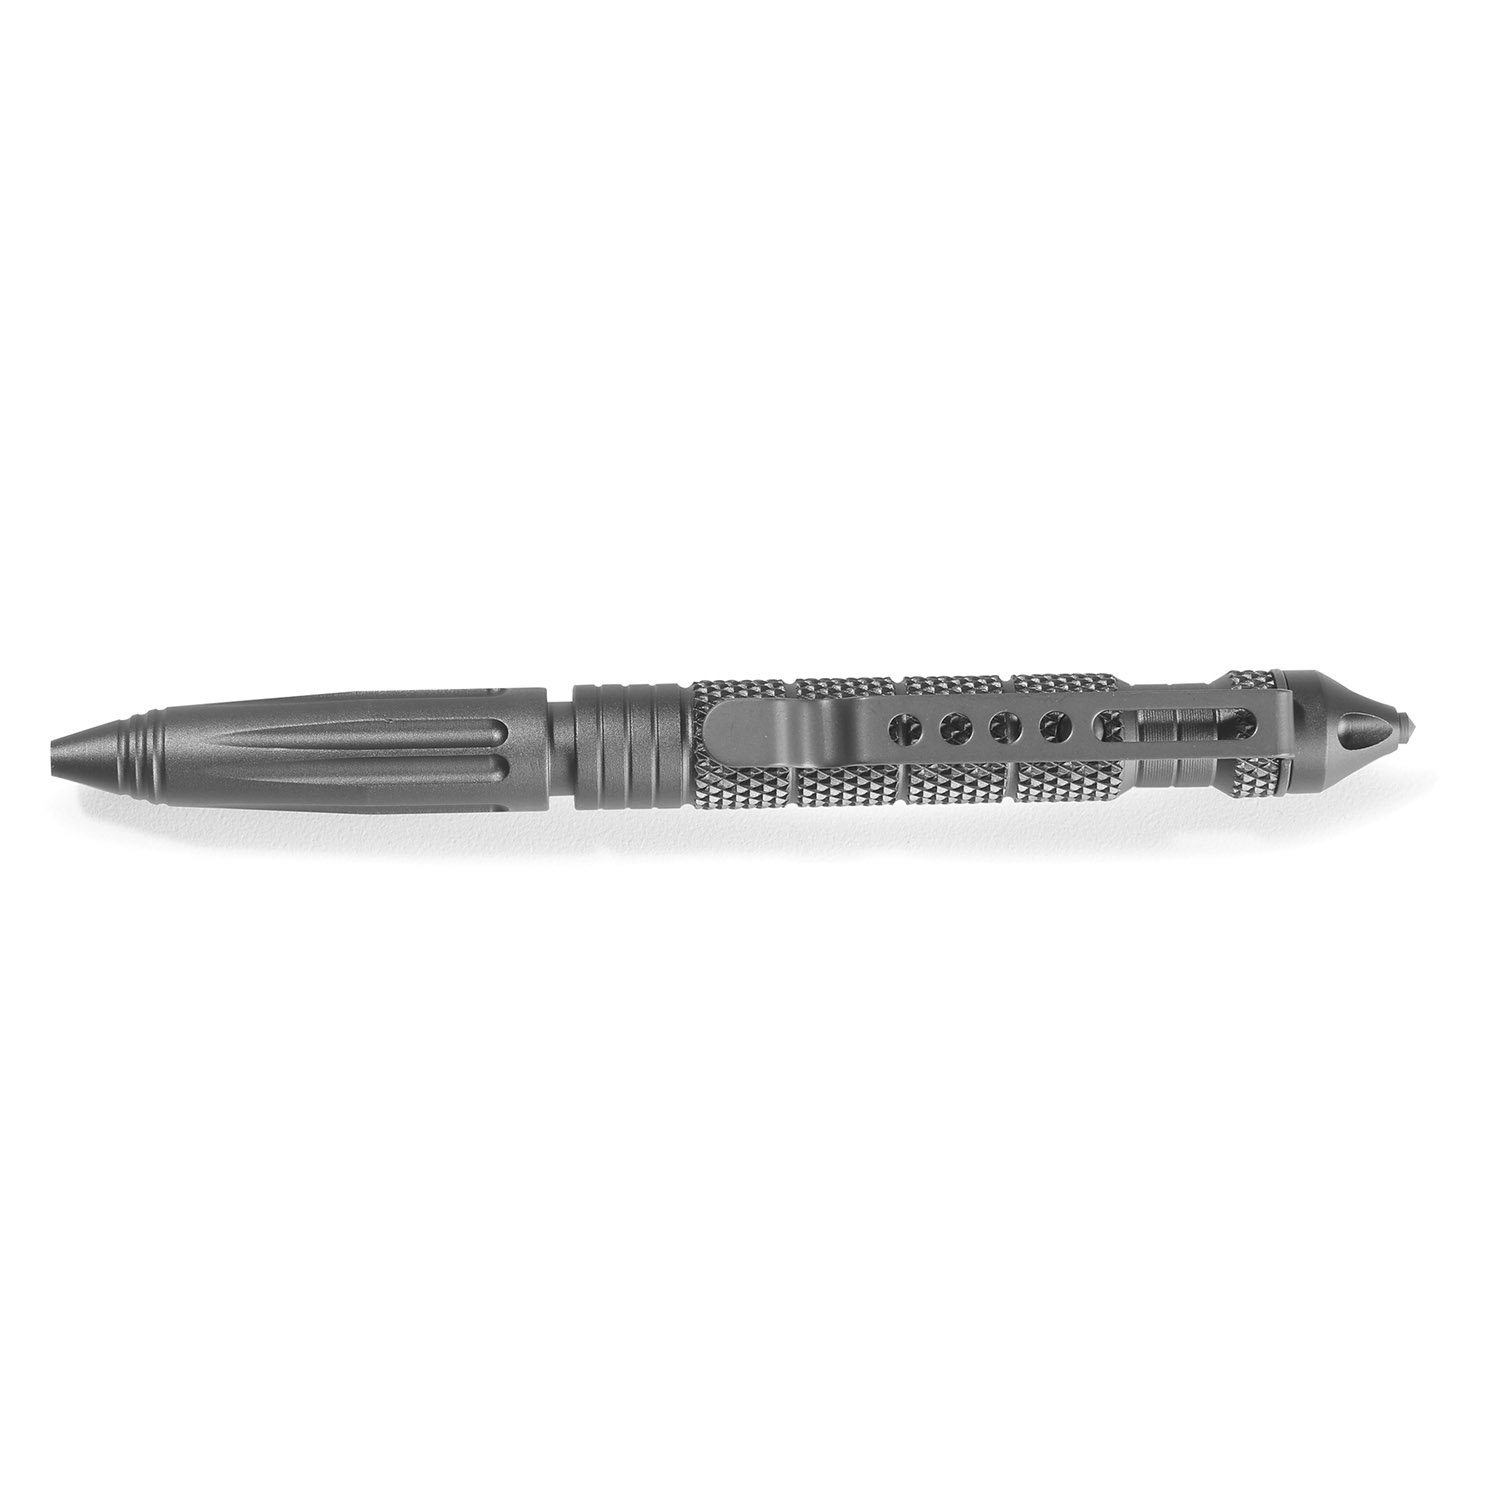 UZI Tactical Pen with Glass Breaker Tip